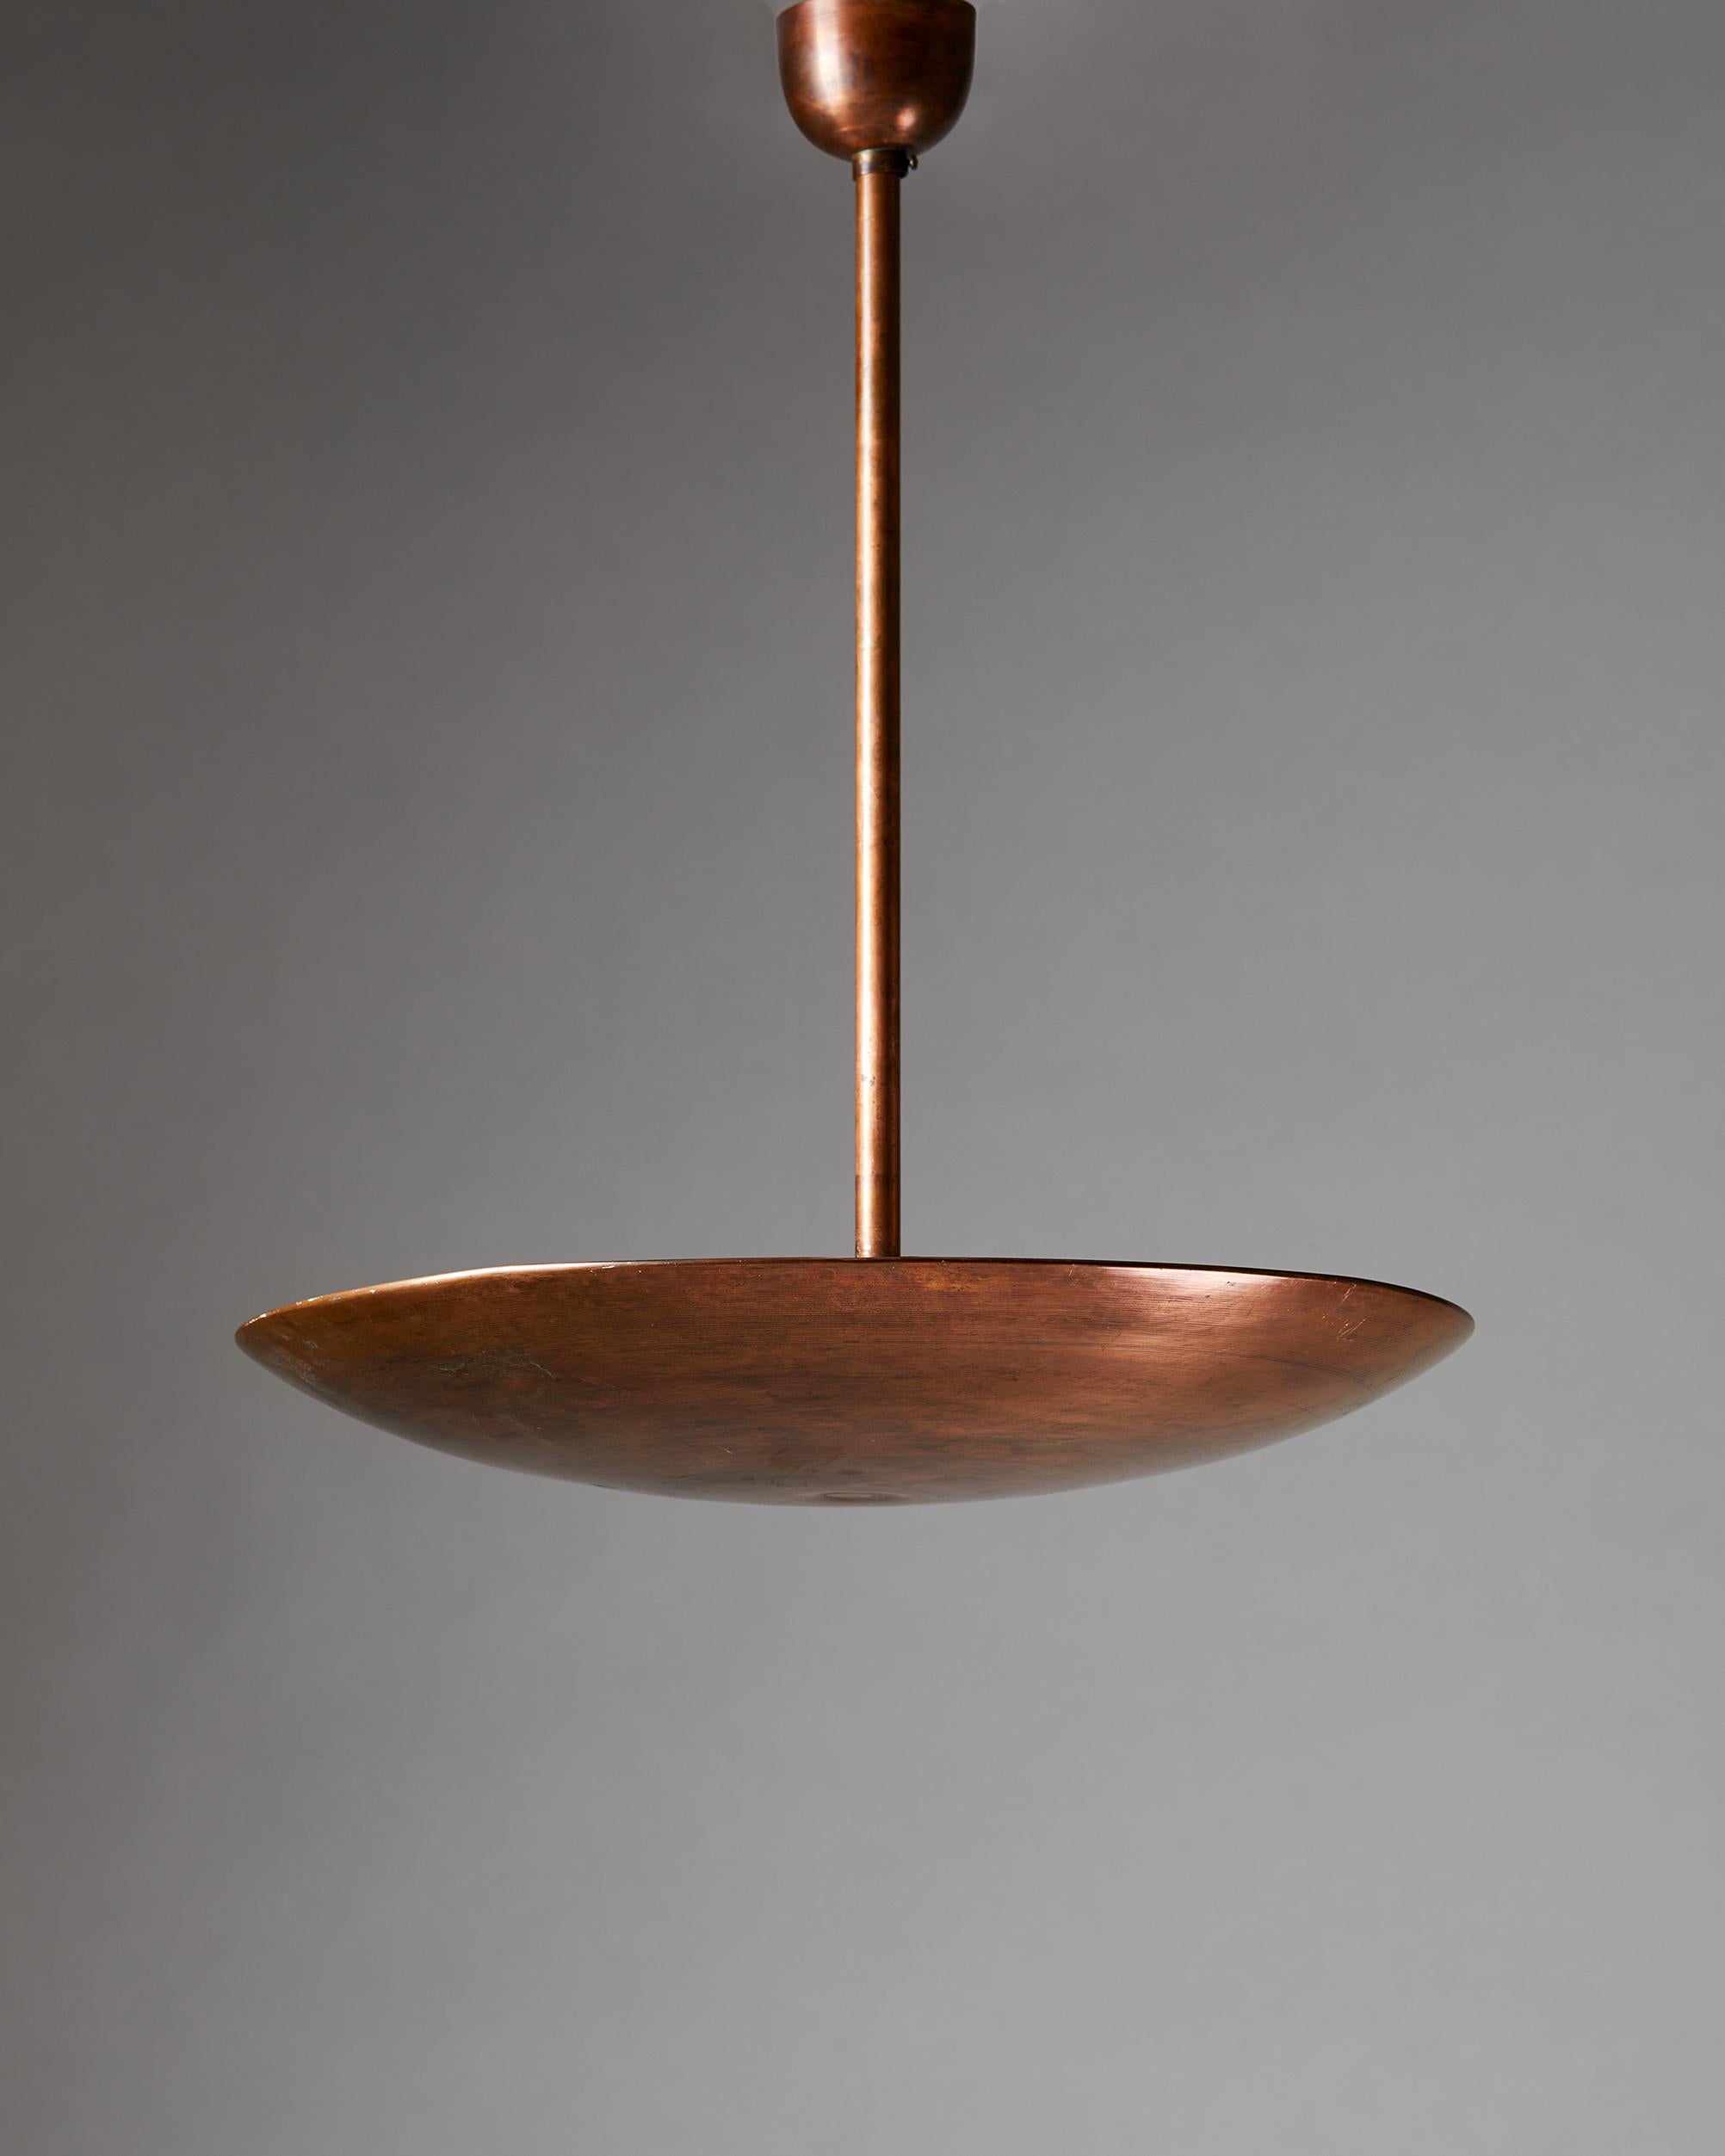 Copper bowl and stem.

Measures: H 75 cm/ 2' 5 1/2